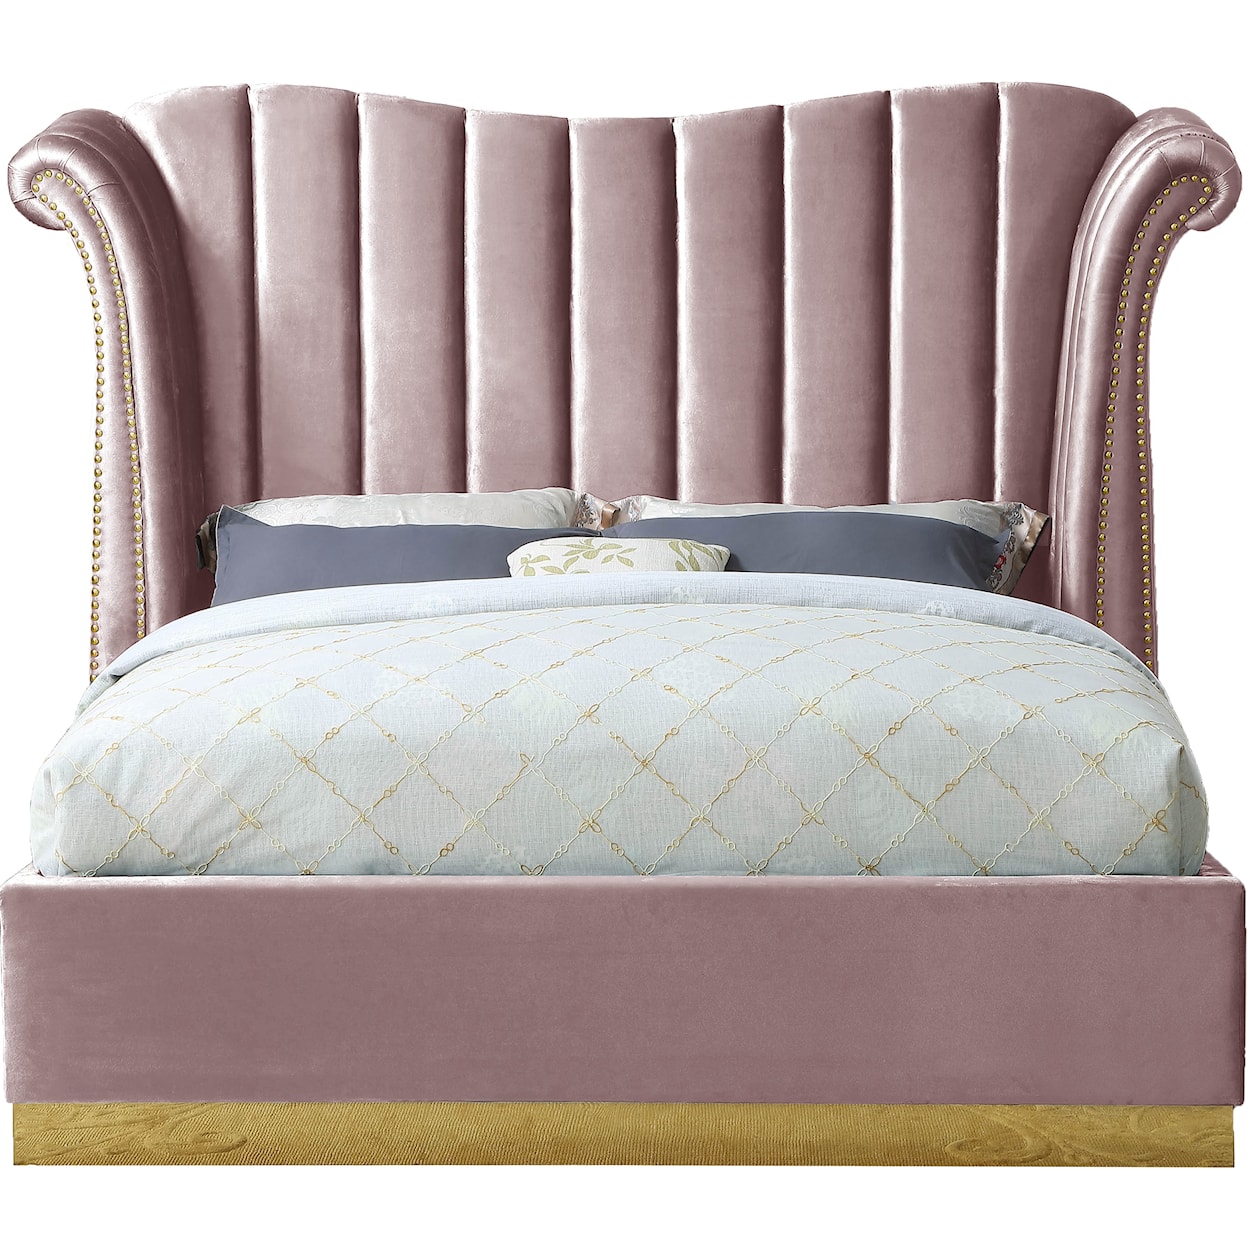 Meridian Furniture Flora Upholstered Pink Velvet Queen Bed 